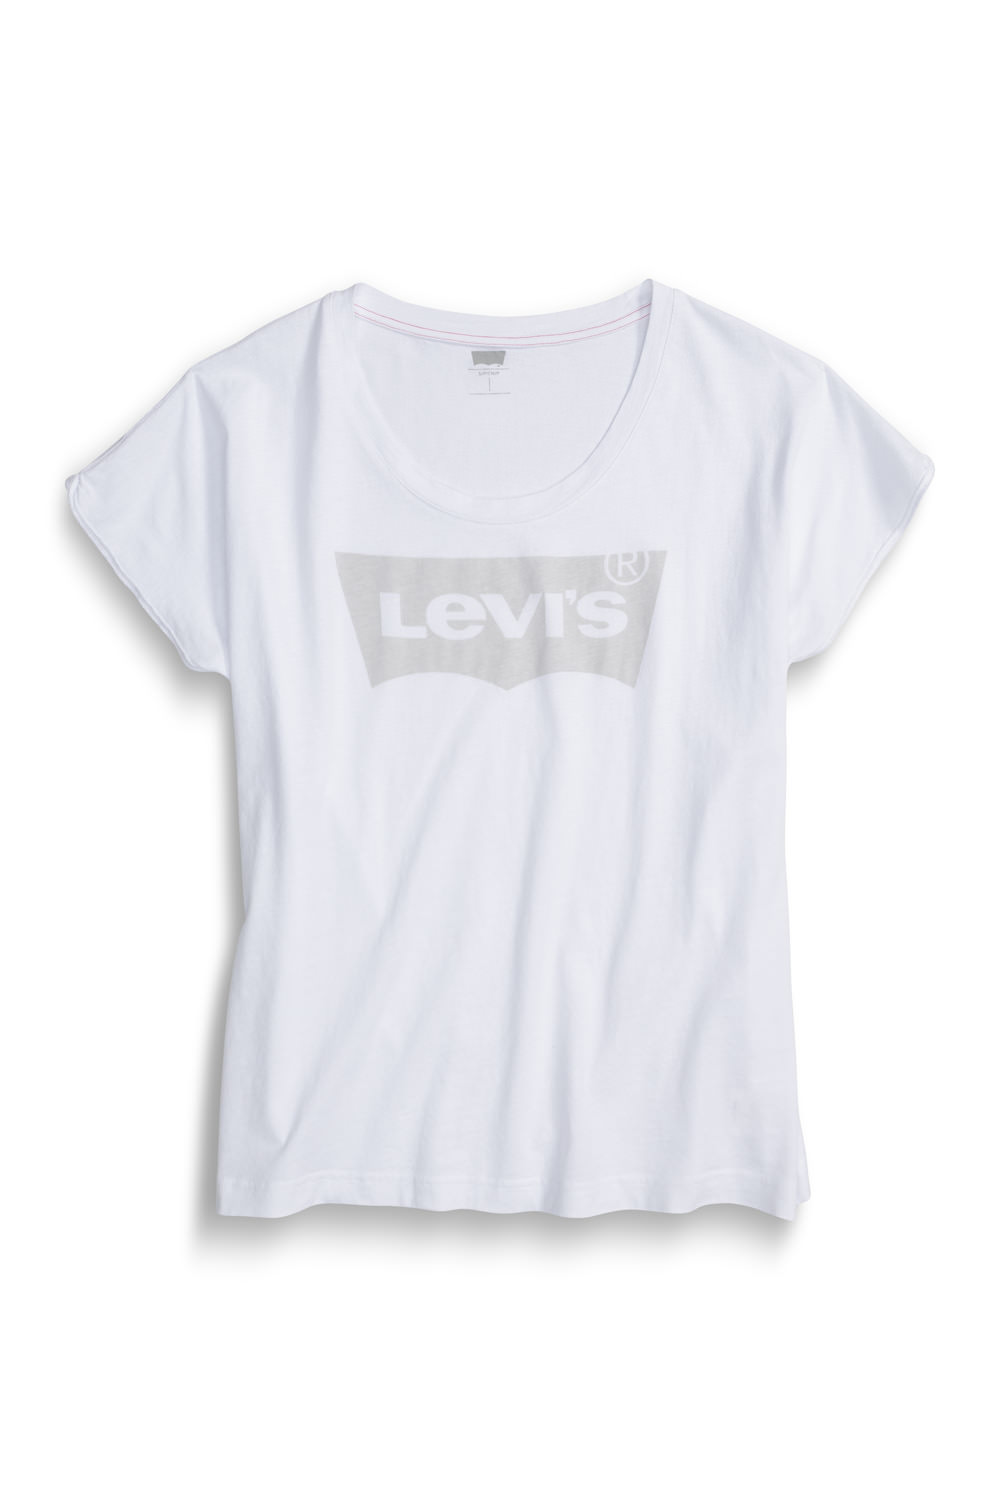 Levi's'tan yeni bir koleksiyon; 'White on White'